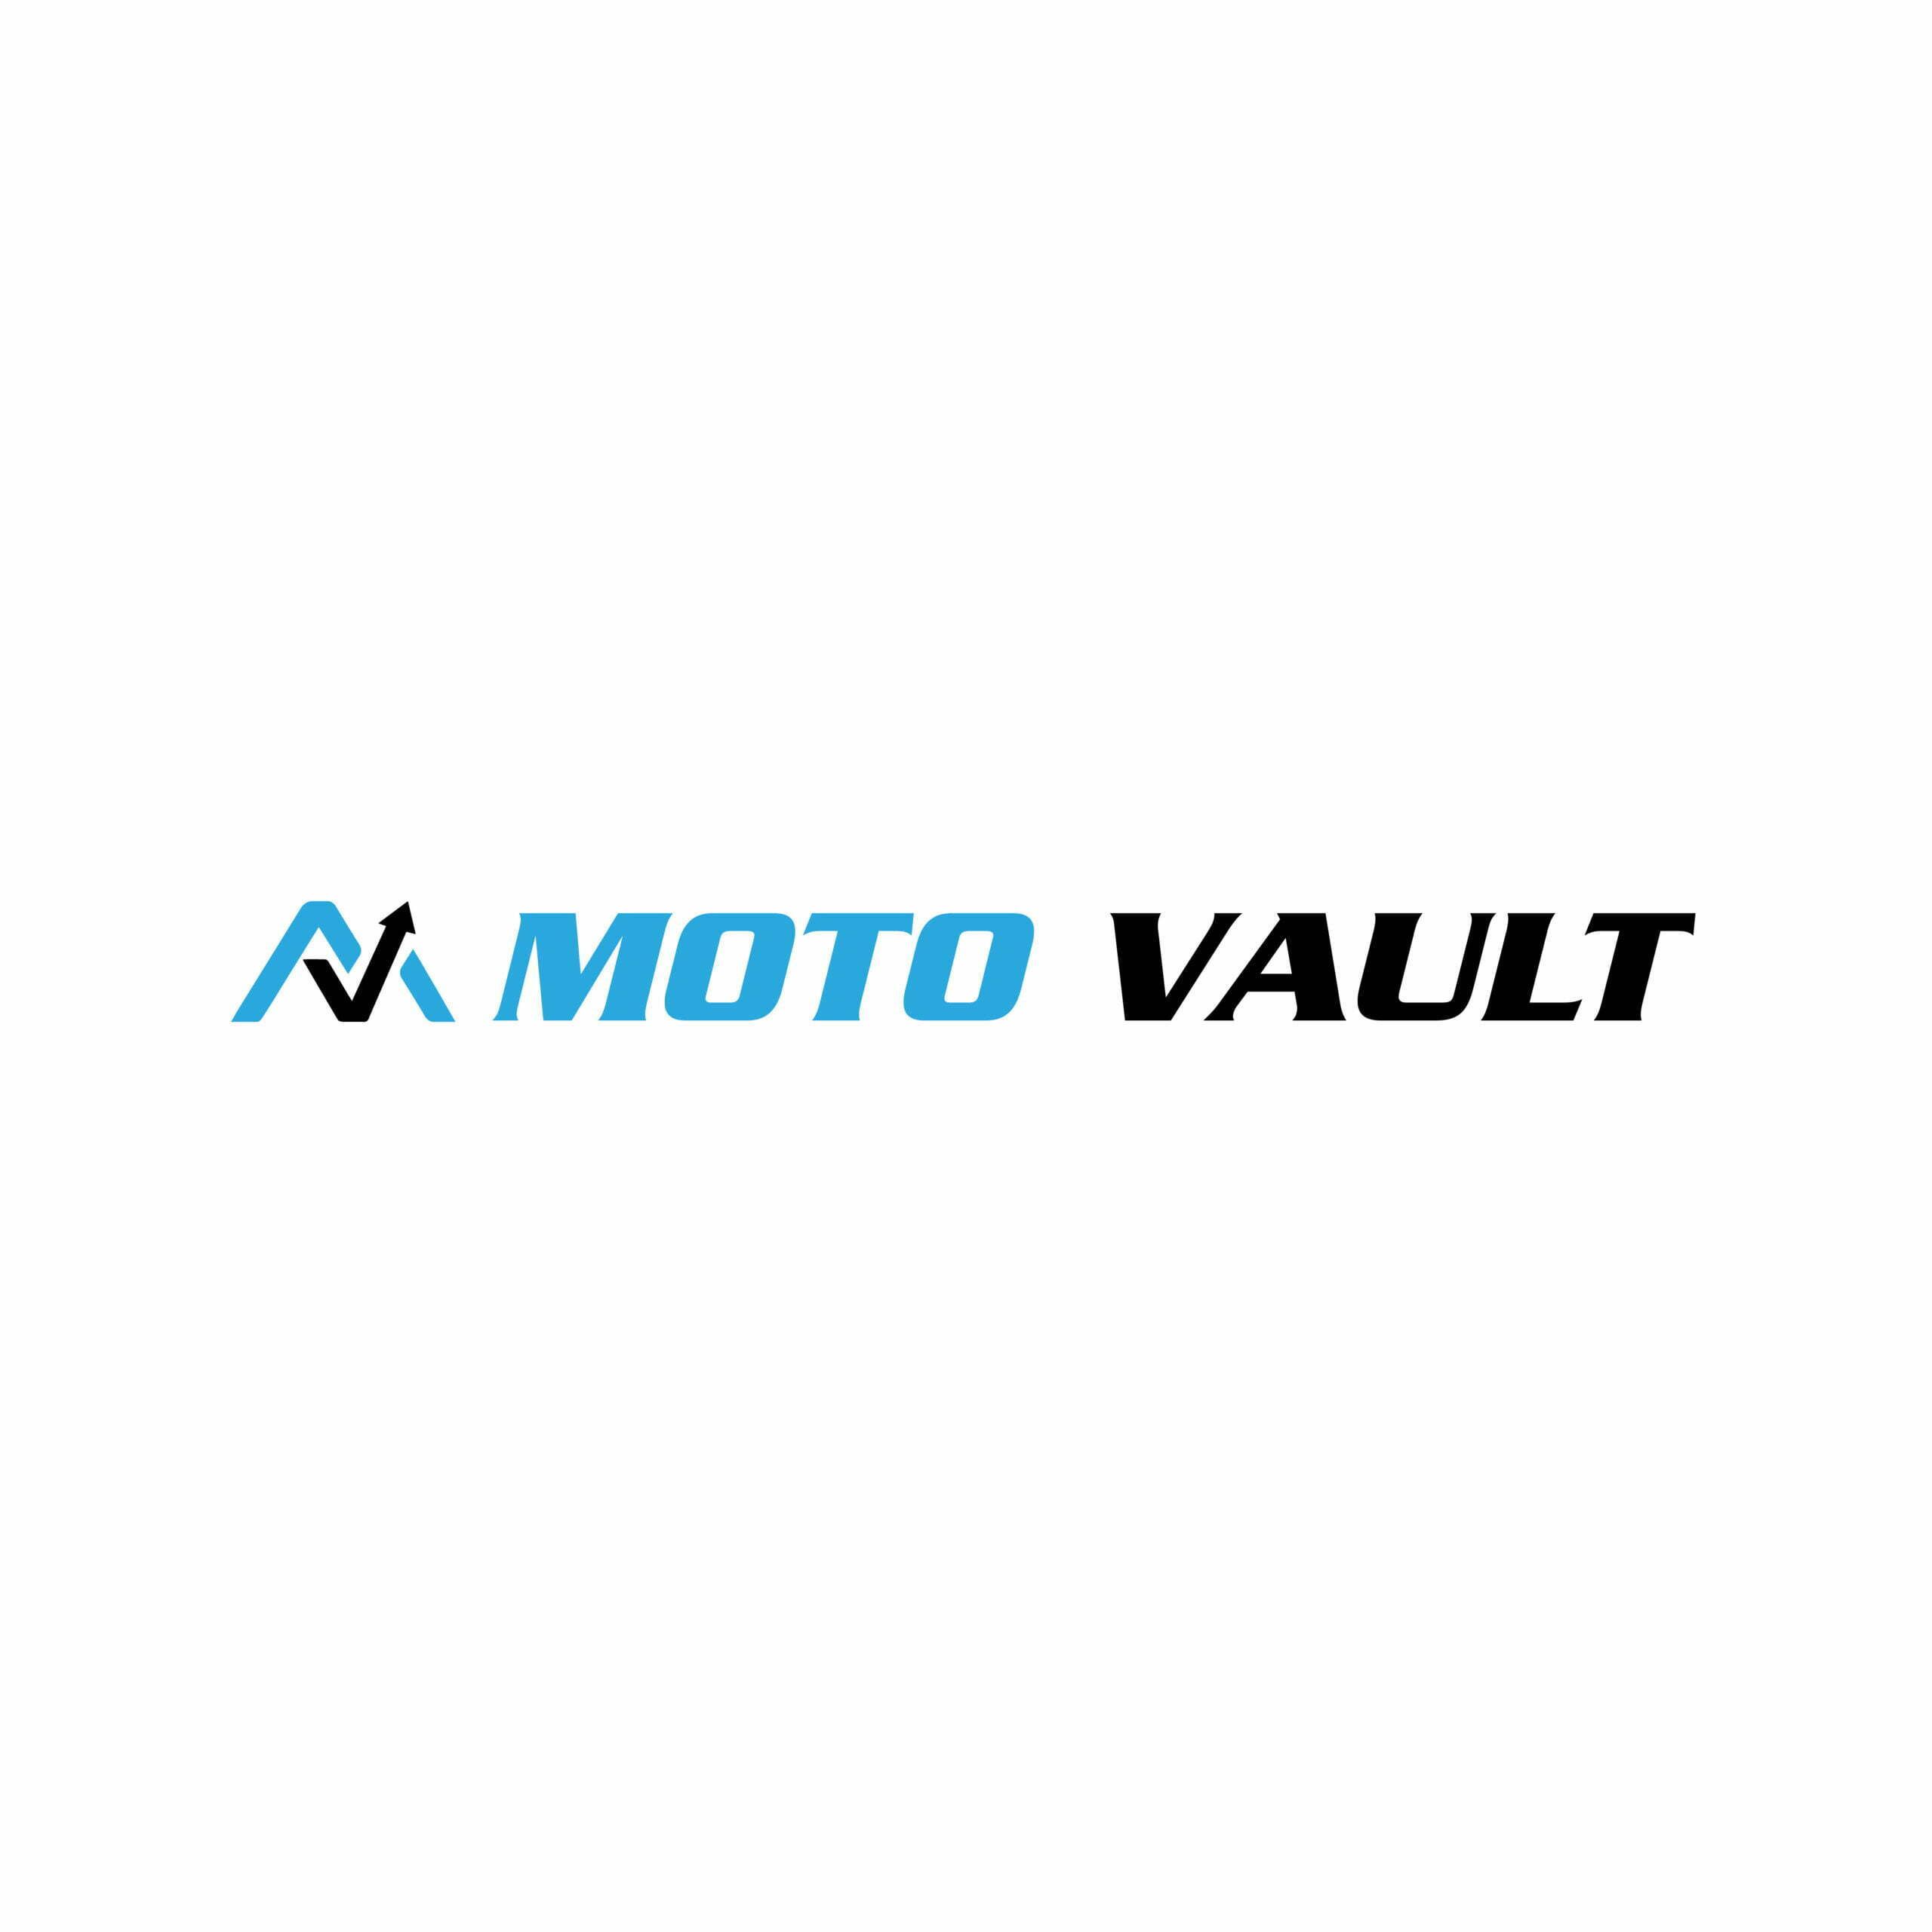 Moto Vault Multi Brand SuperBike Showroom To Have Many Brand! (1)